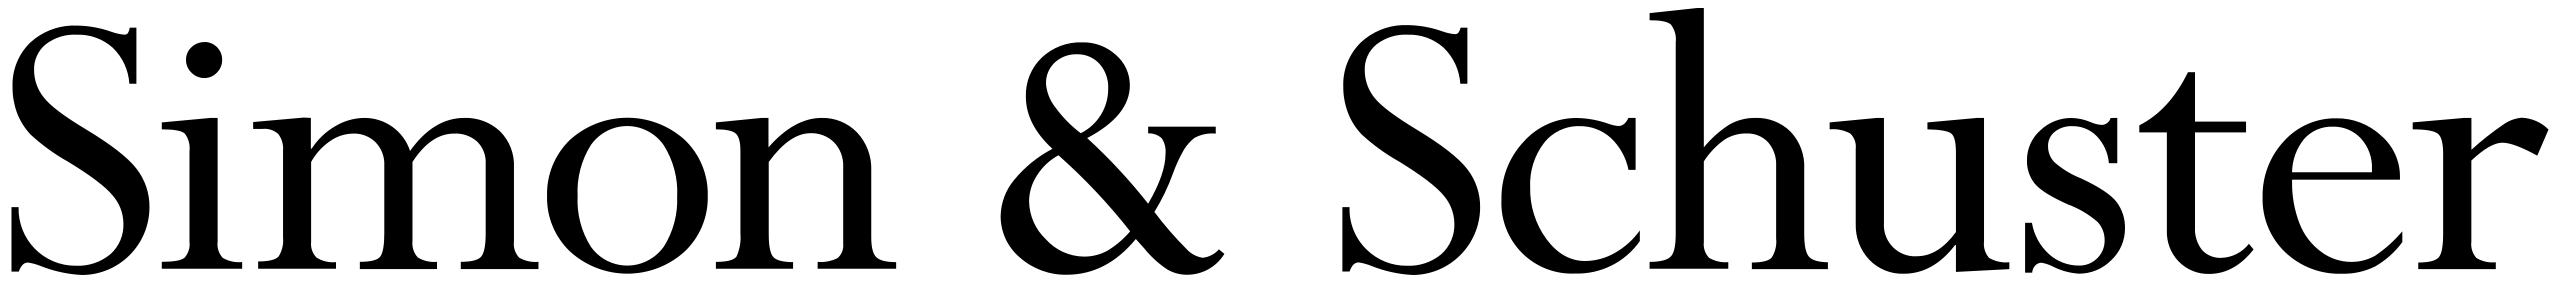 Simon_&_Schuster_logo.svg